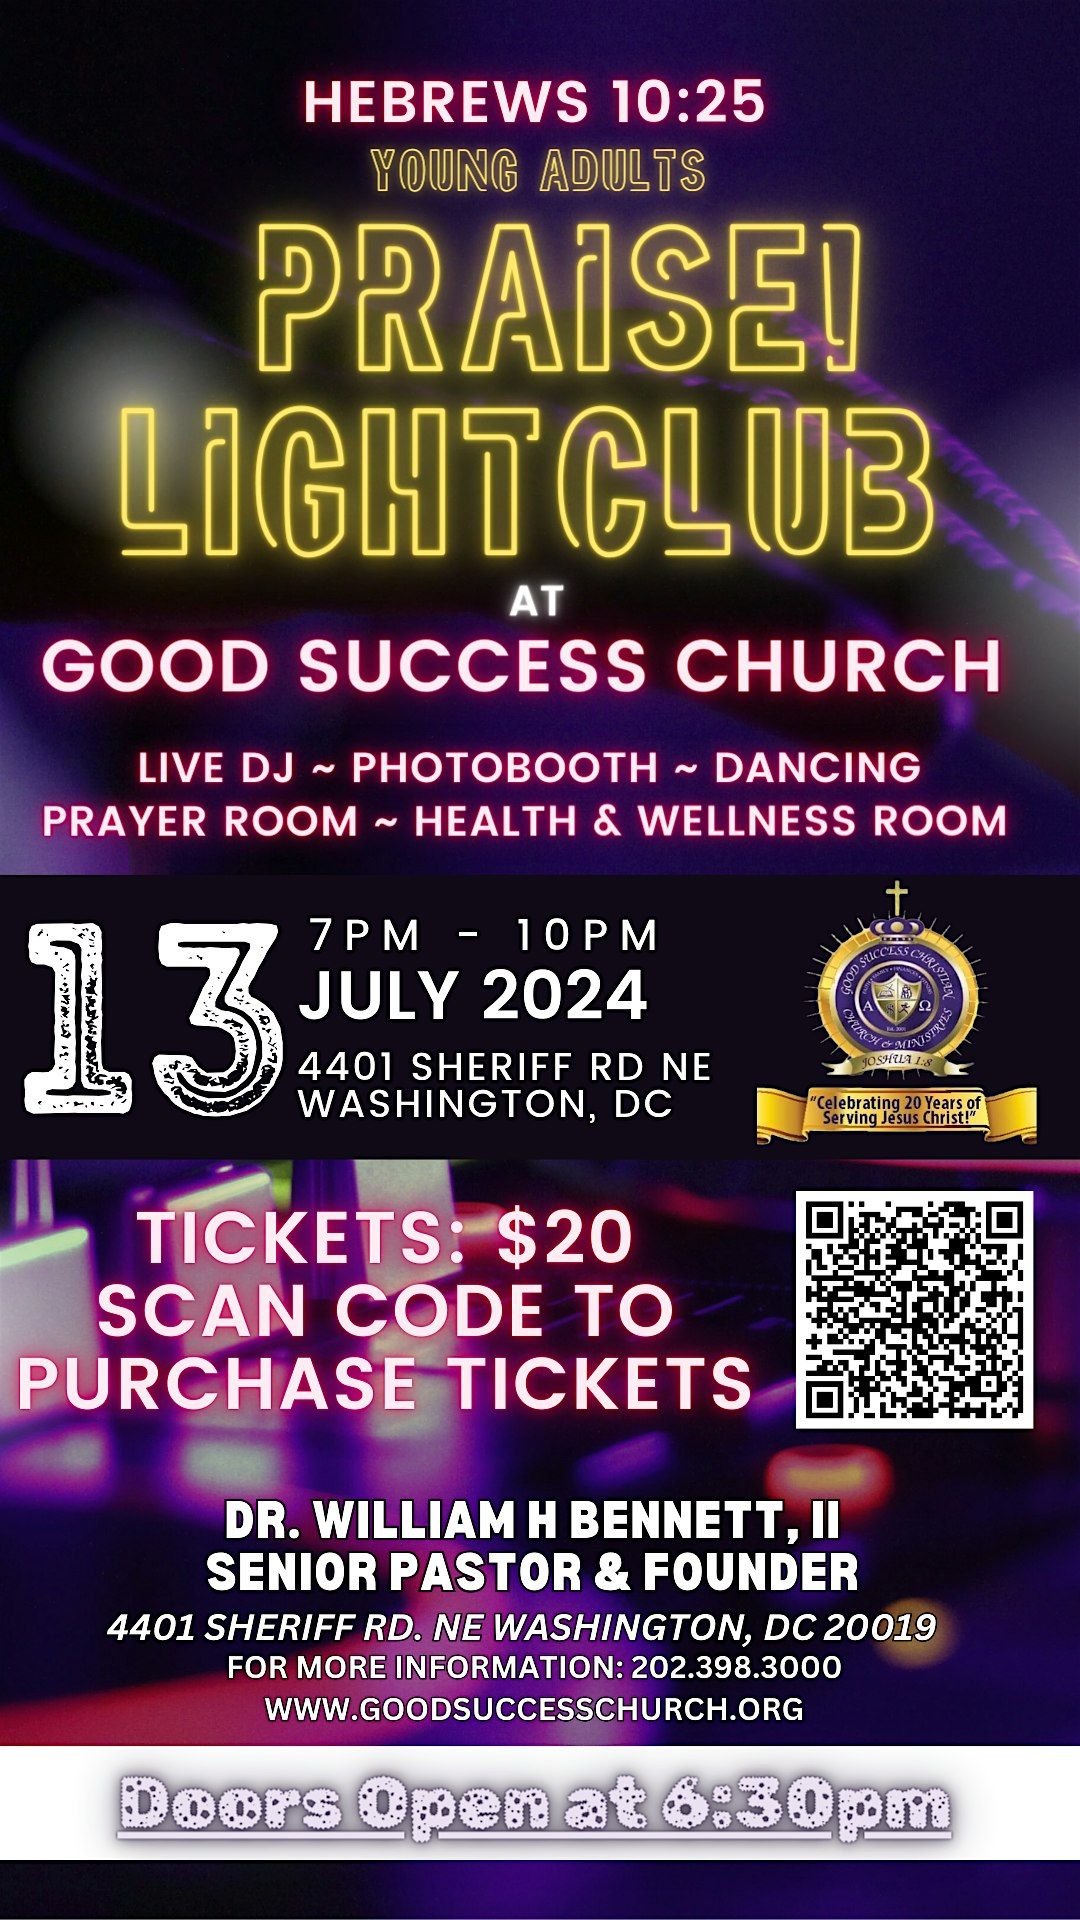 PRAISE! Lightclub @ Good Success Church (Young Adults Event)